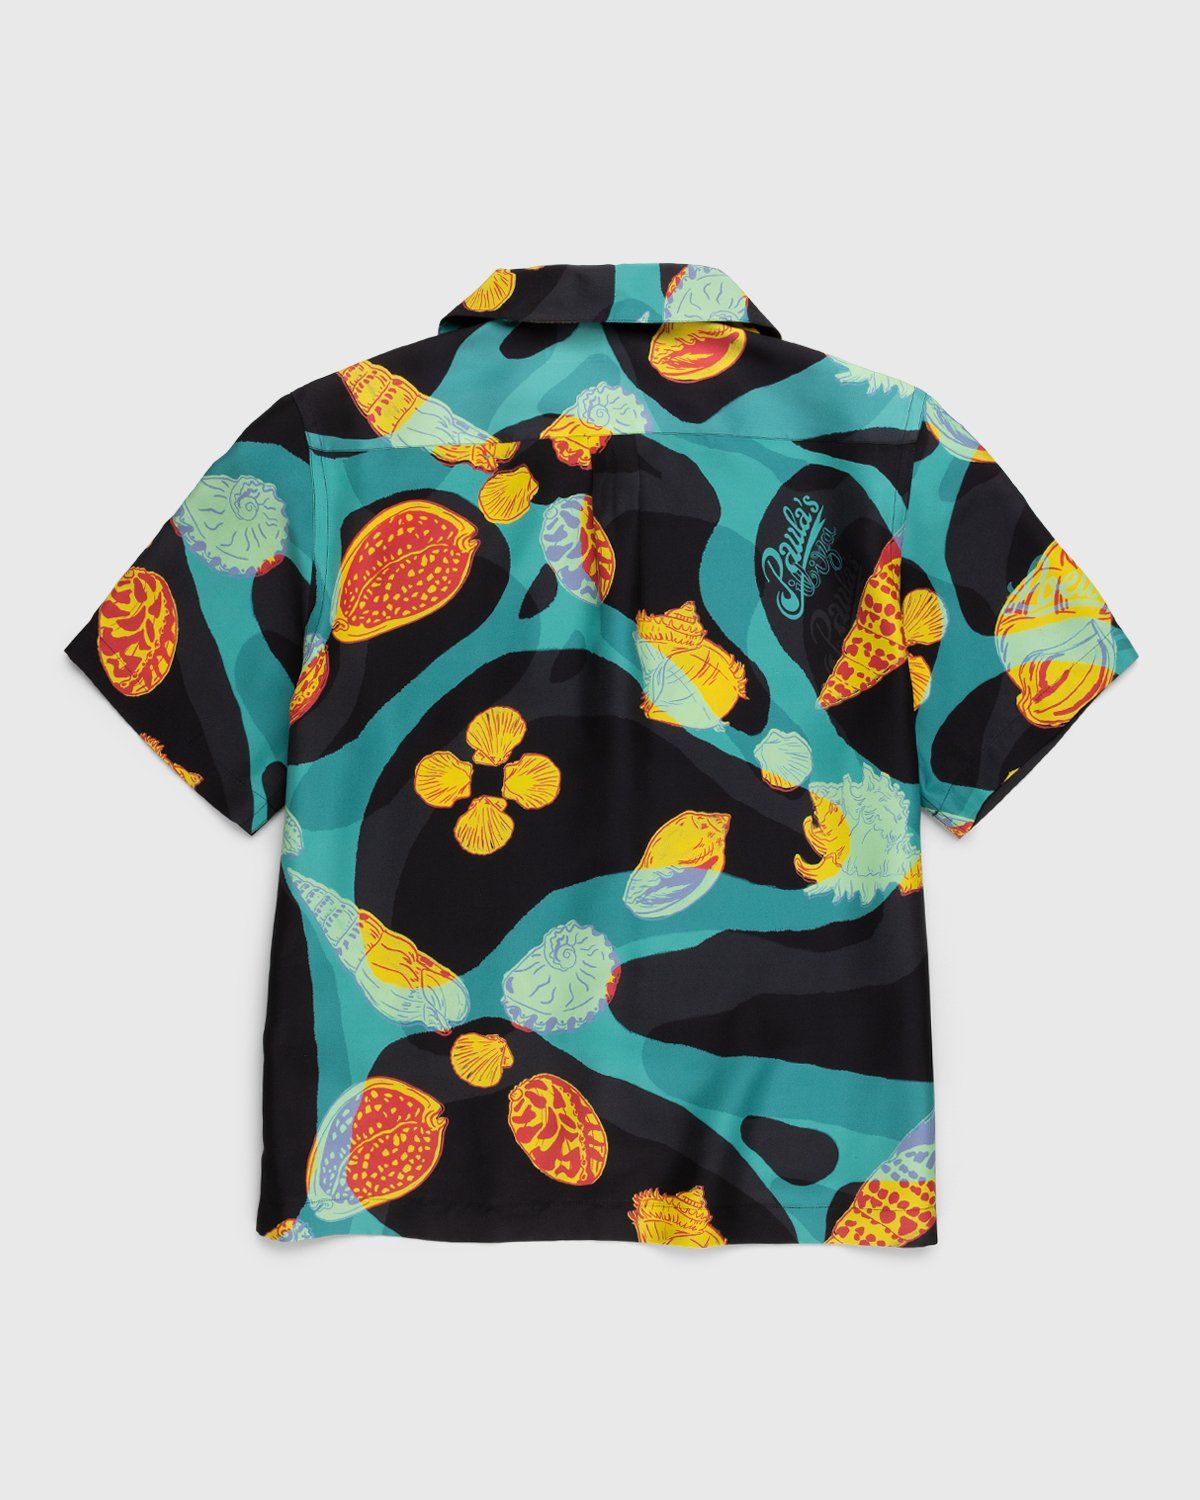 Loewe – Paula's Ibiza Shell Print Bowling Shirt Black - Shirts - Multi - Image 2